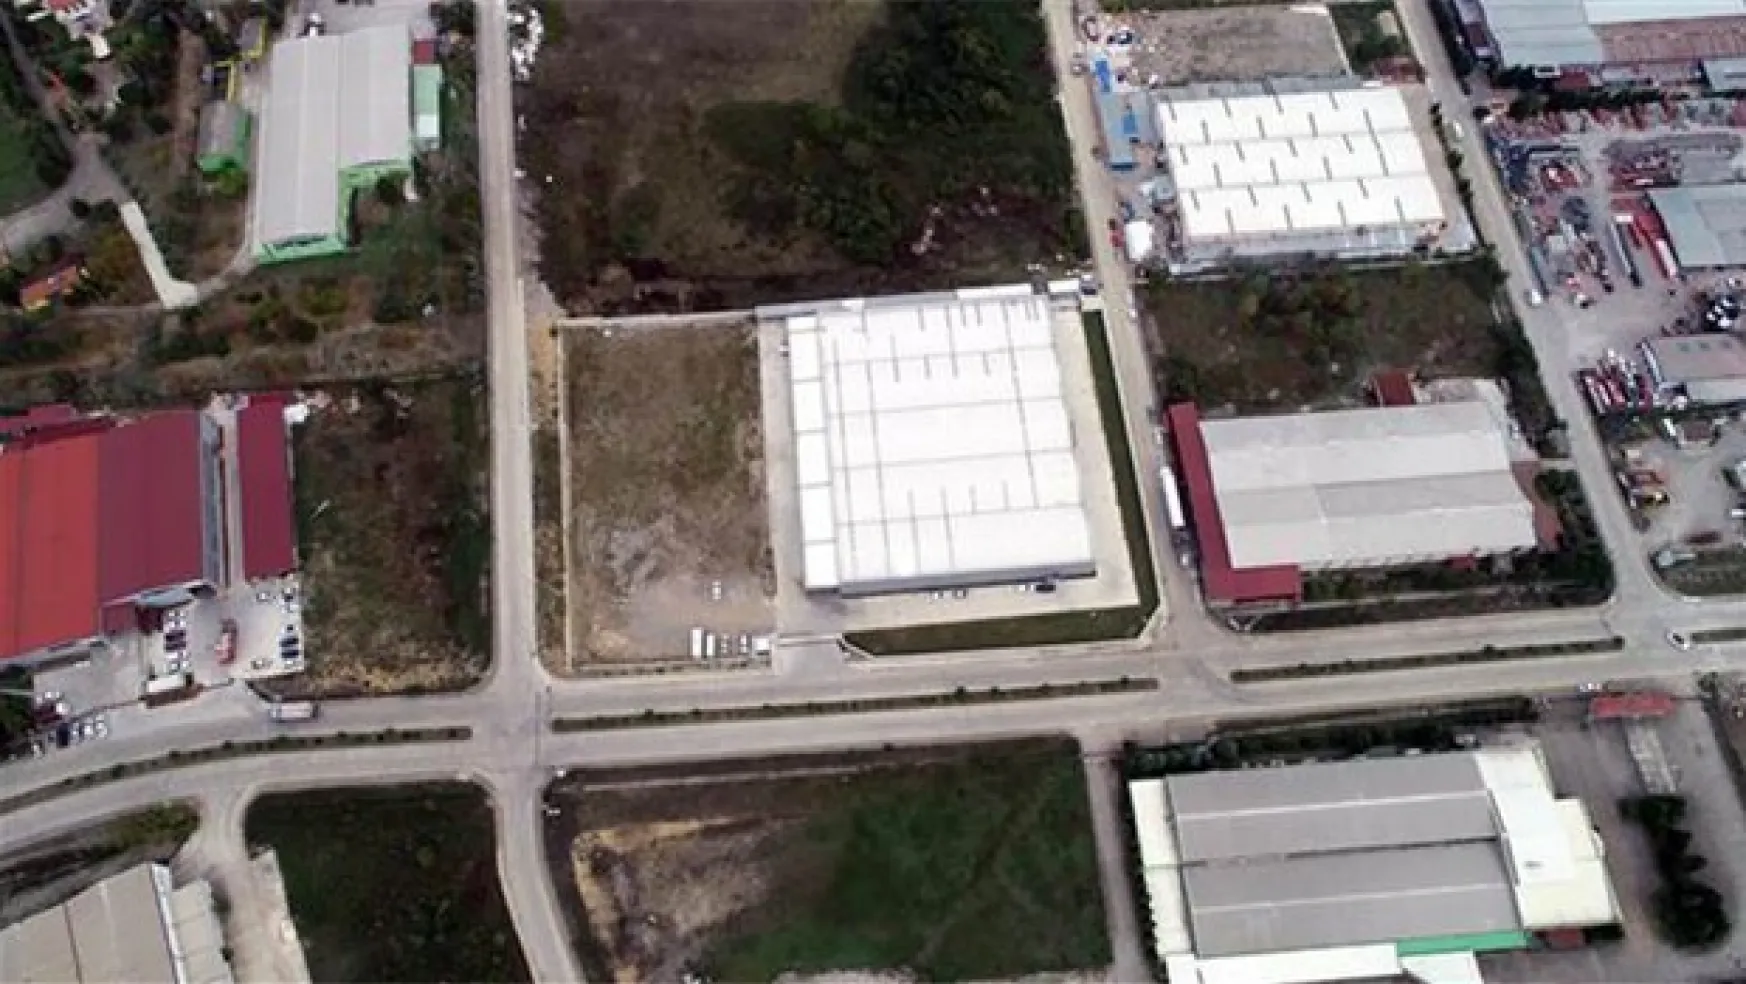 Zonguldak'ta iki tekstil fabrikasında üretim durdu